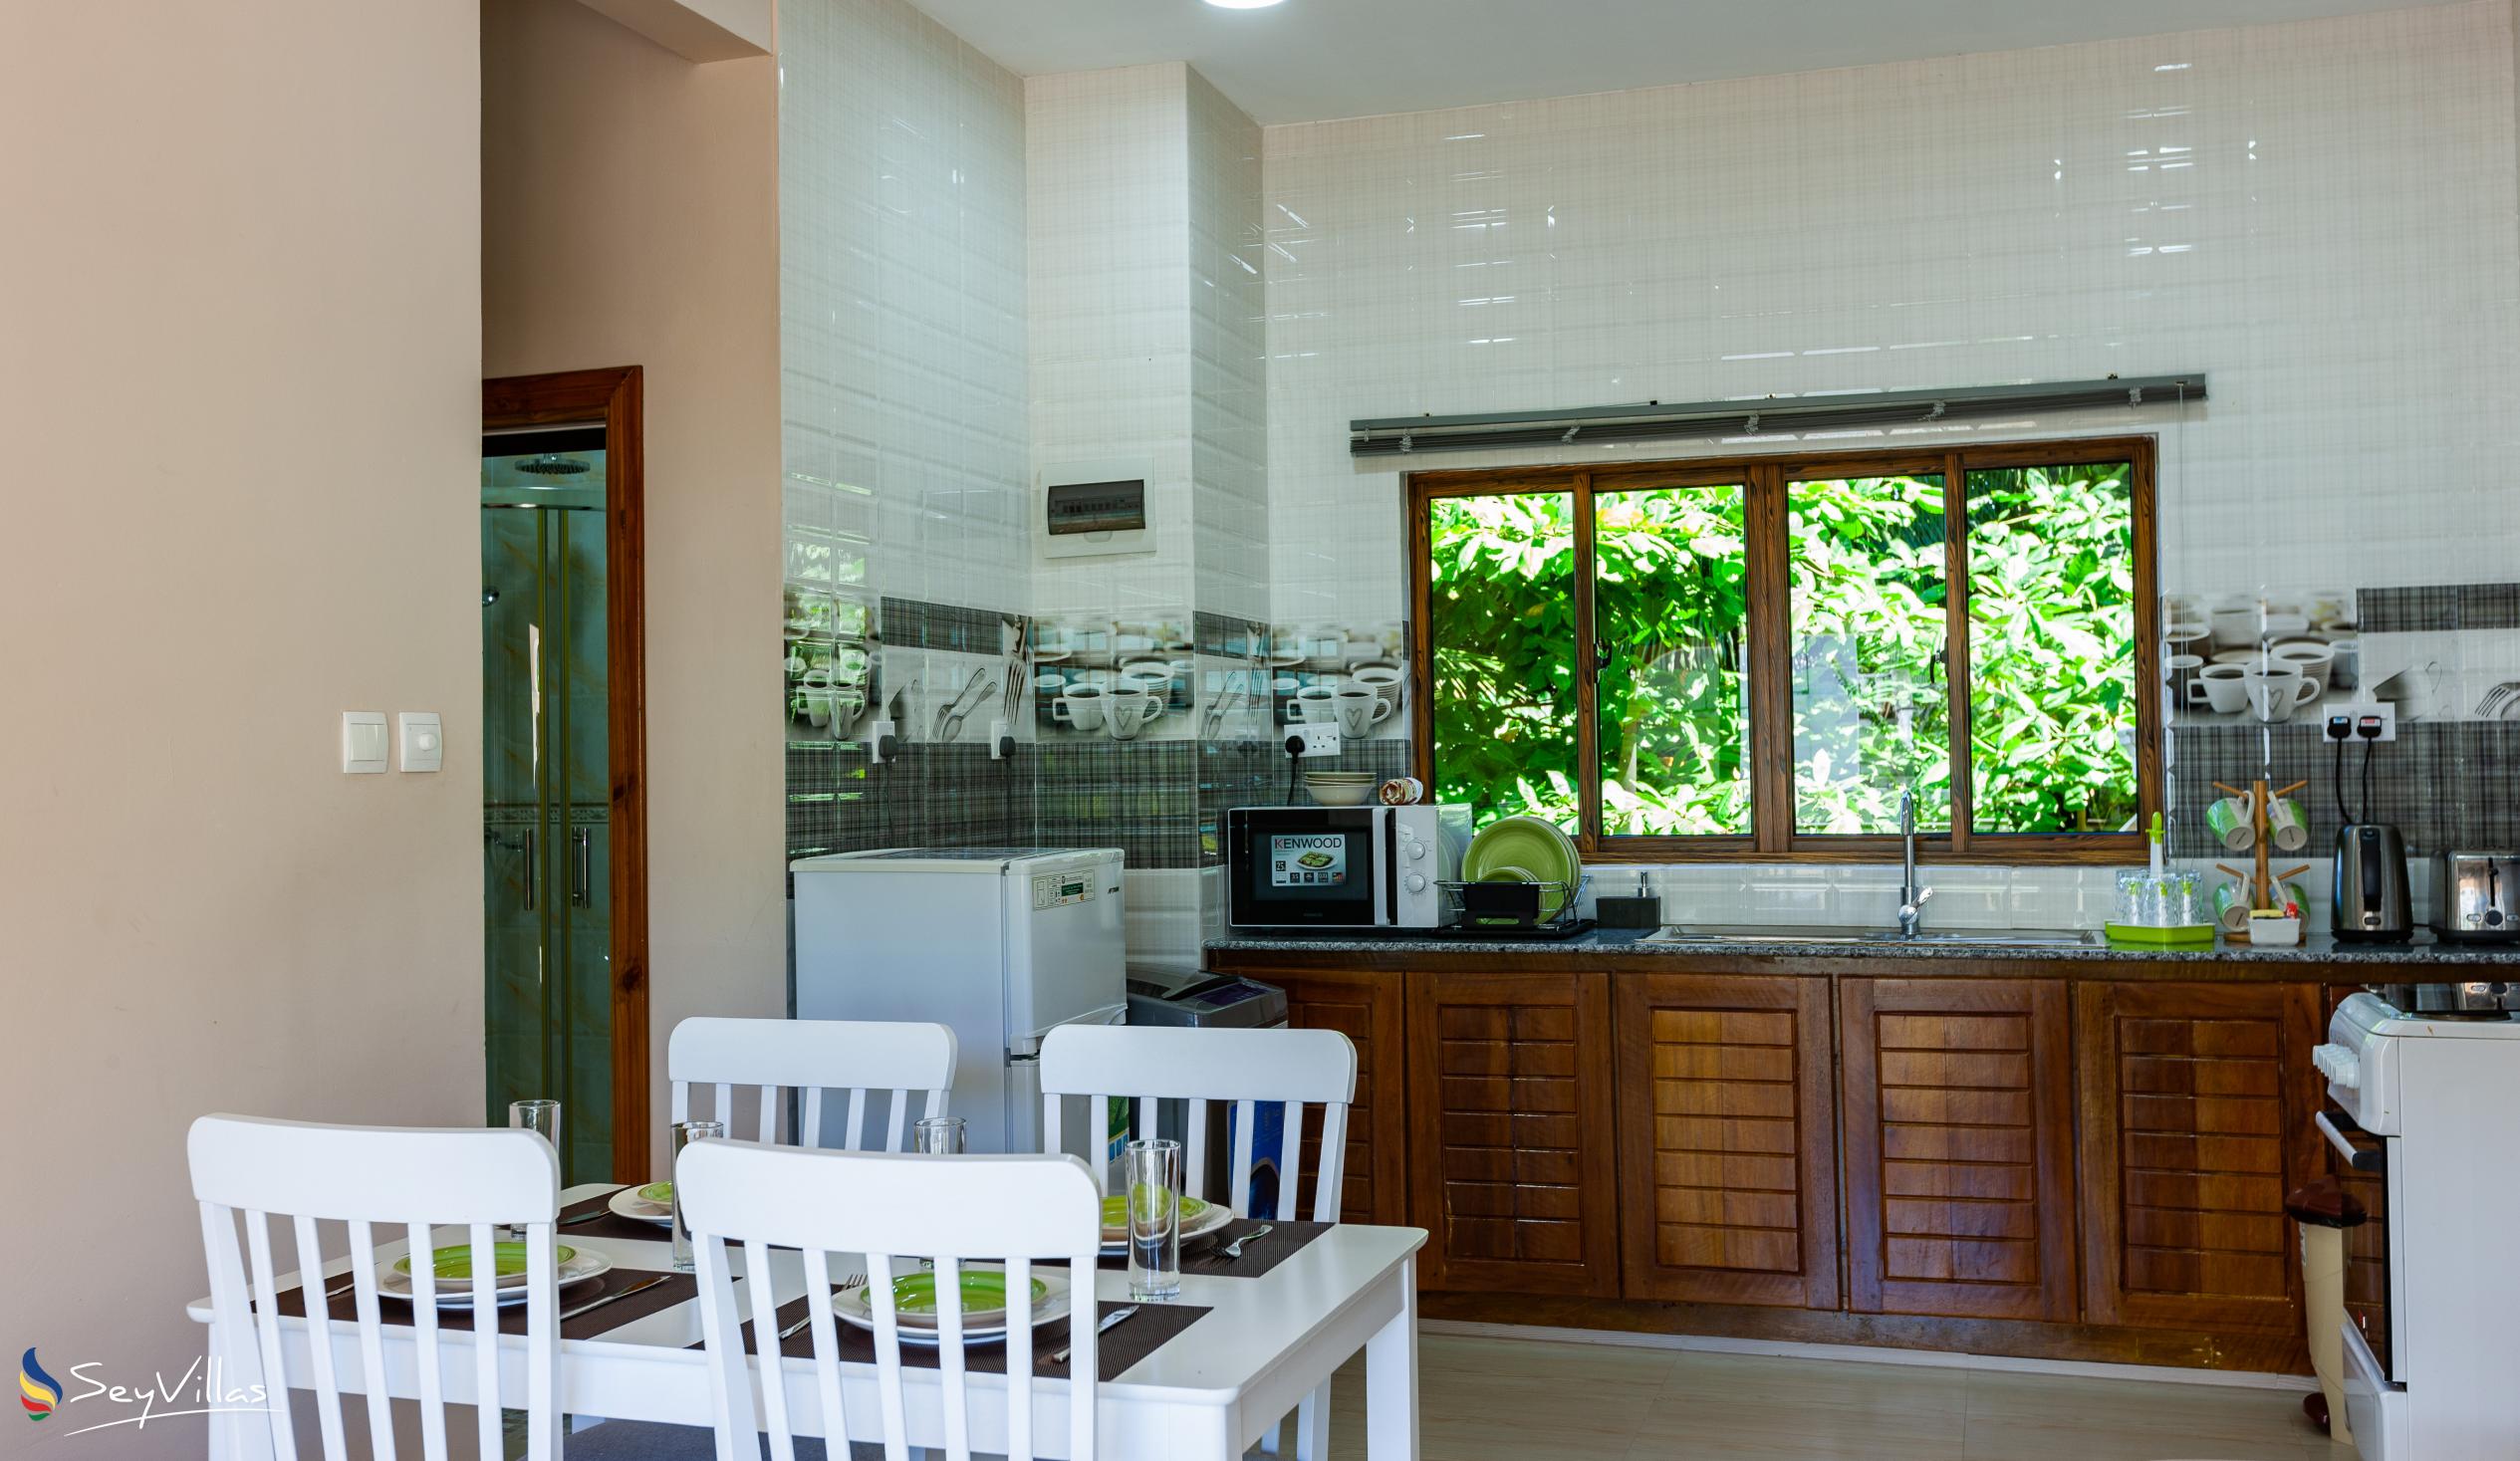 Photo 48: Stone Self Catering Apartments - 2-Bedroom Apartment - Praslin (Seychelles)